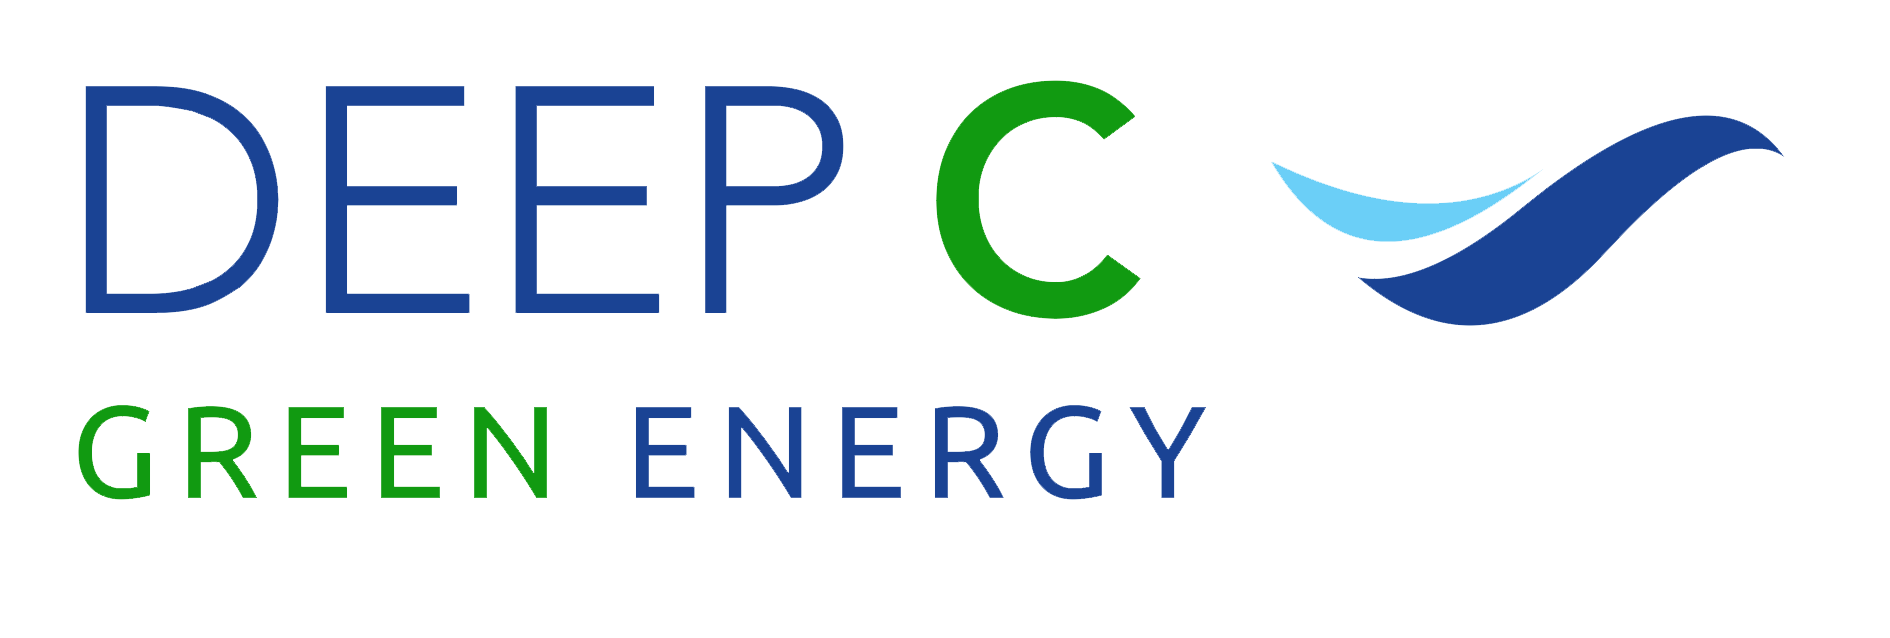 DEEP C Green Energy Transparent